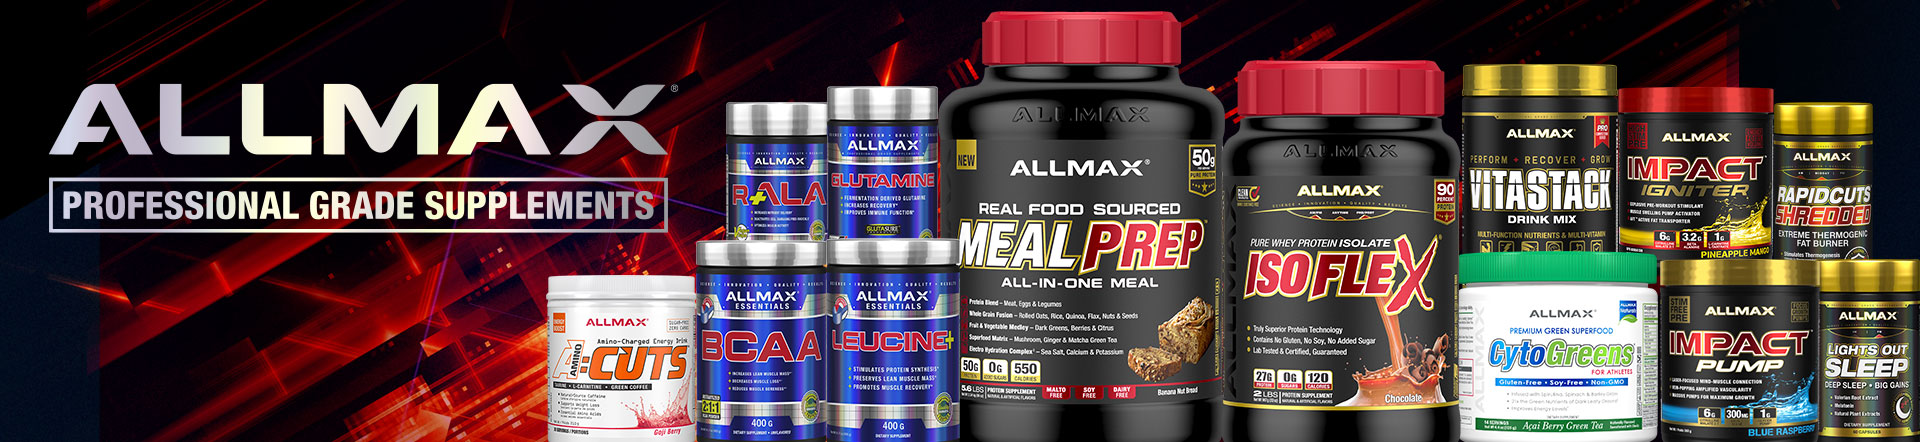 IsoFlex Amino Cuts AllWhey Allflex Hexapro ZMA Keto Muscle Prime Glutamine Meal Prep Omega Allmass